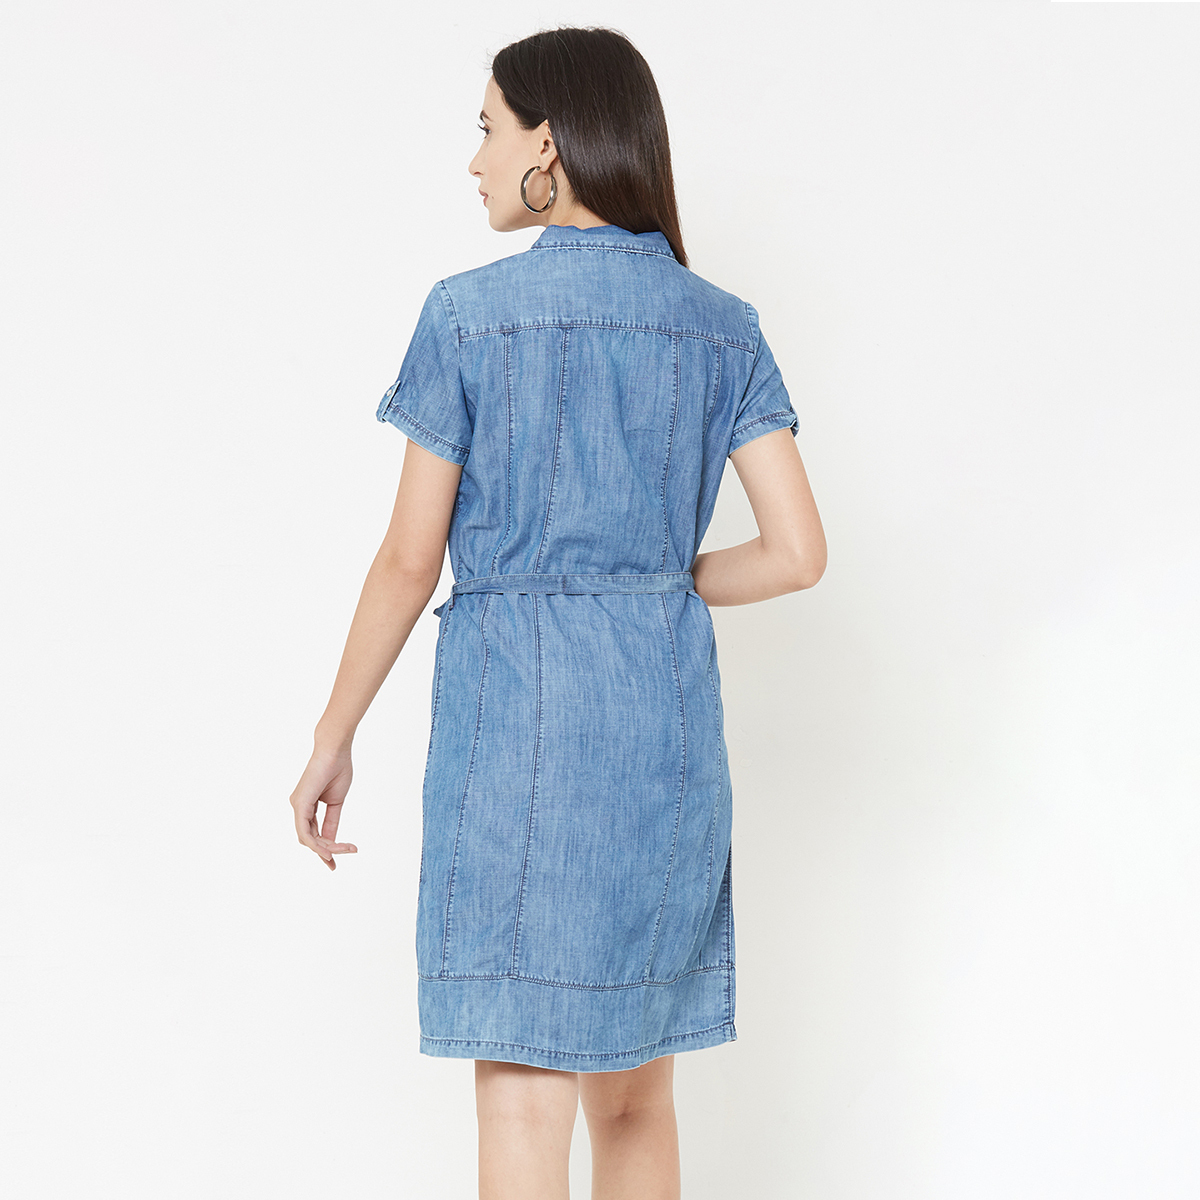 Kraus Jeans Denim Dress For Women Blue